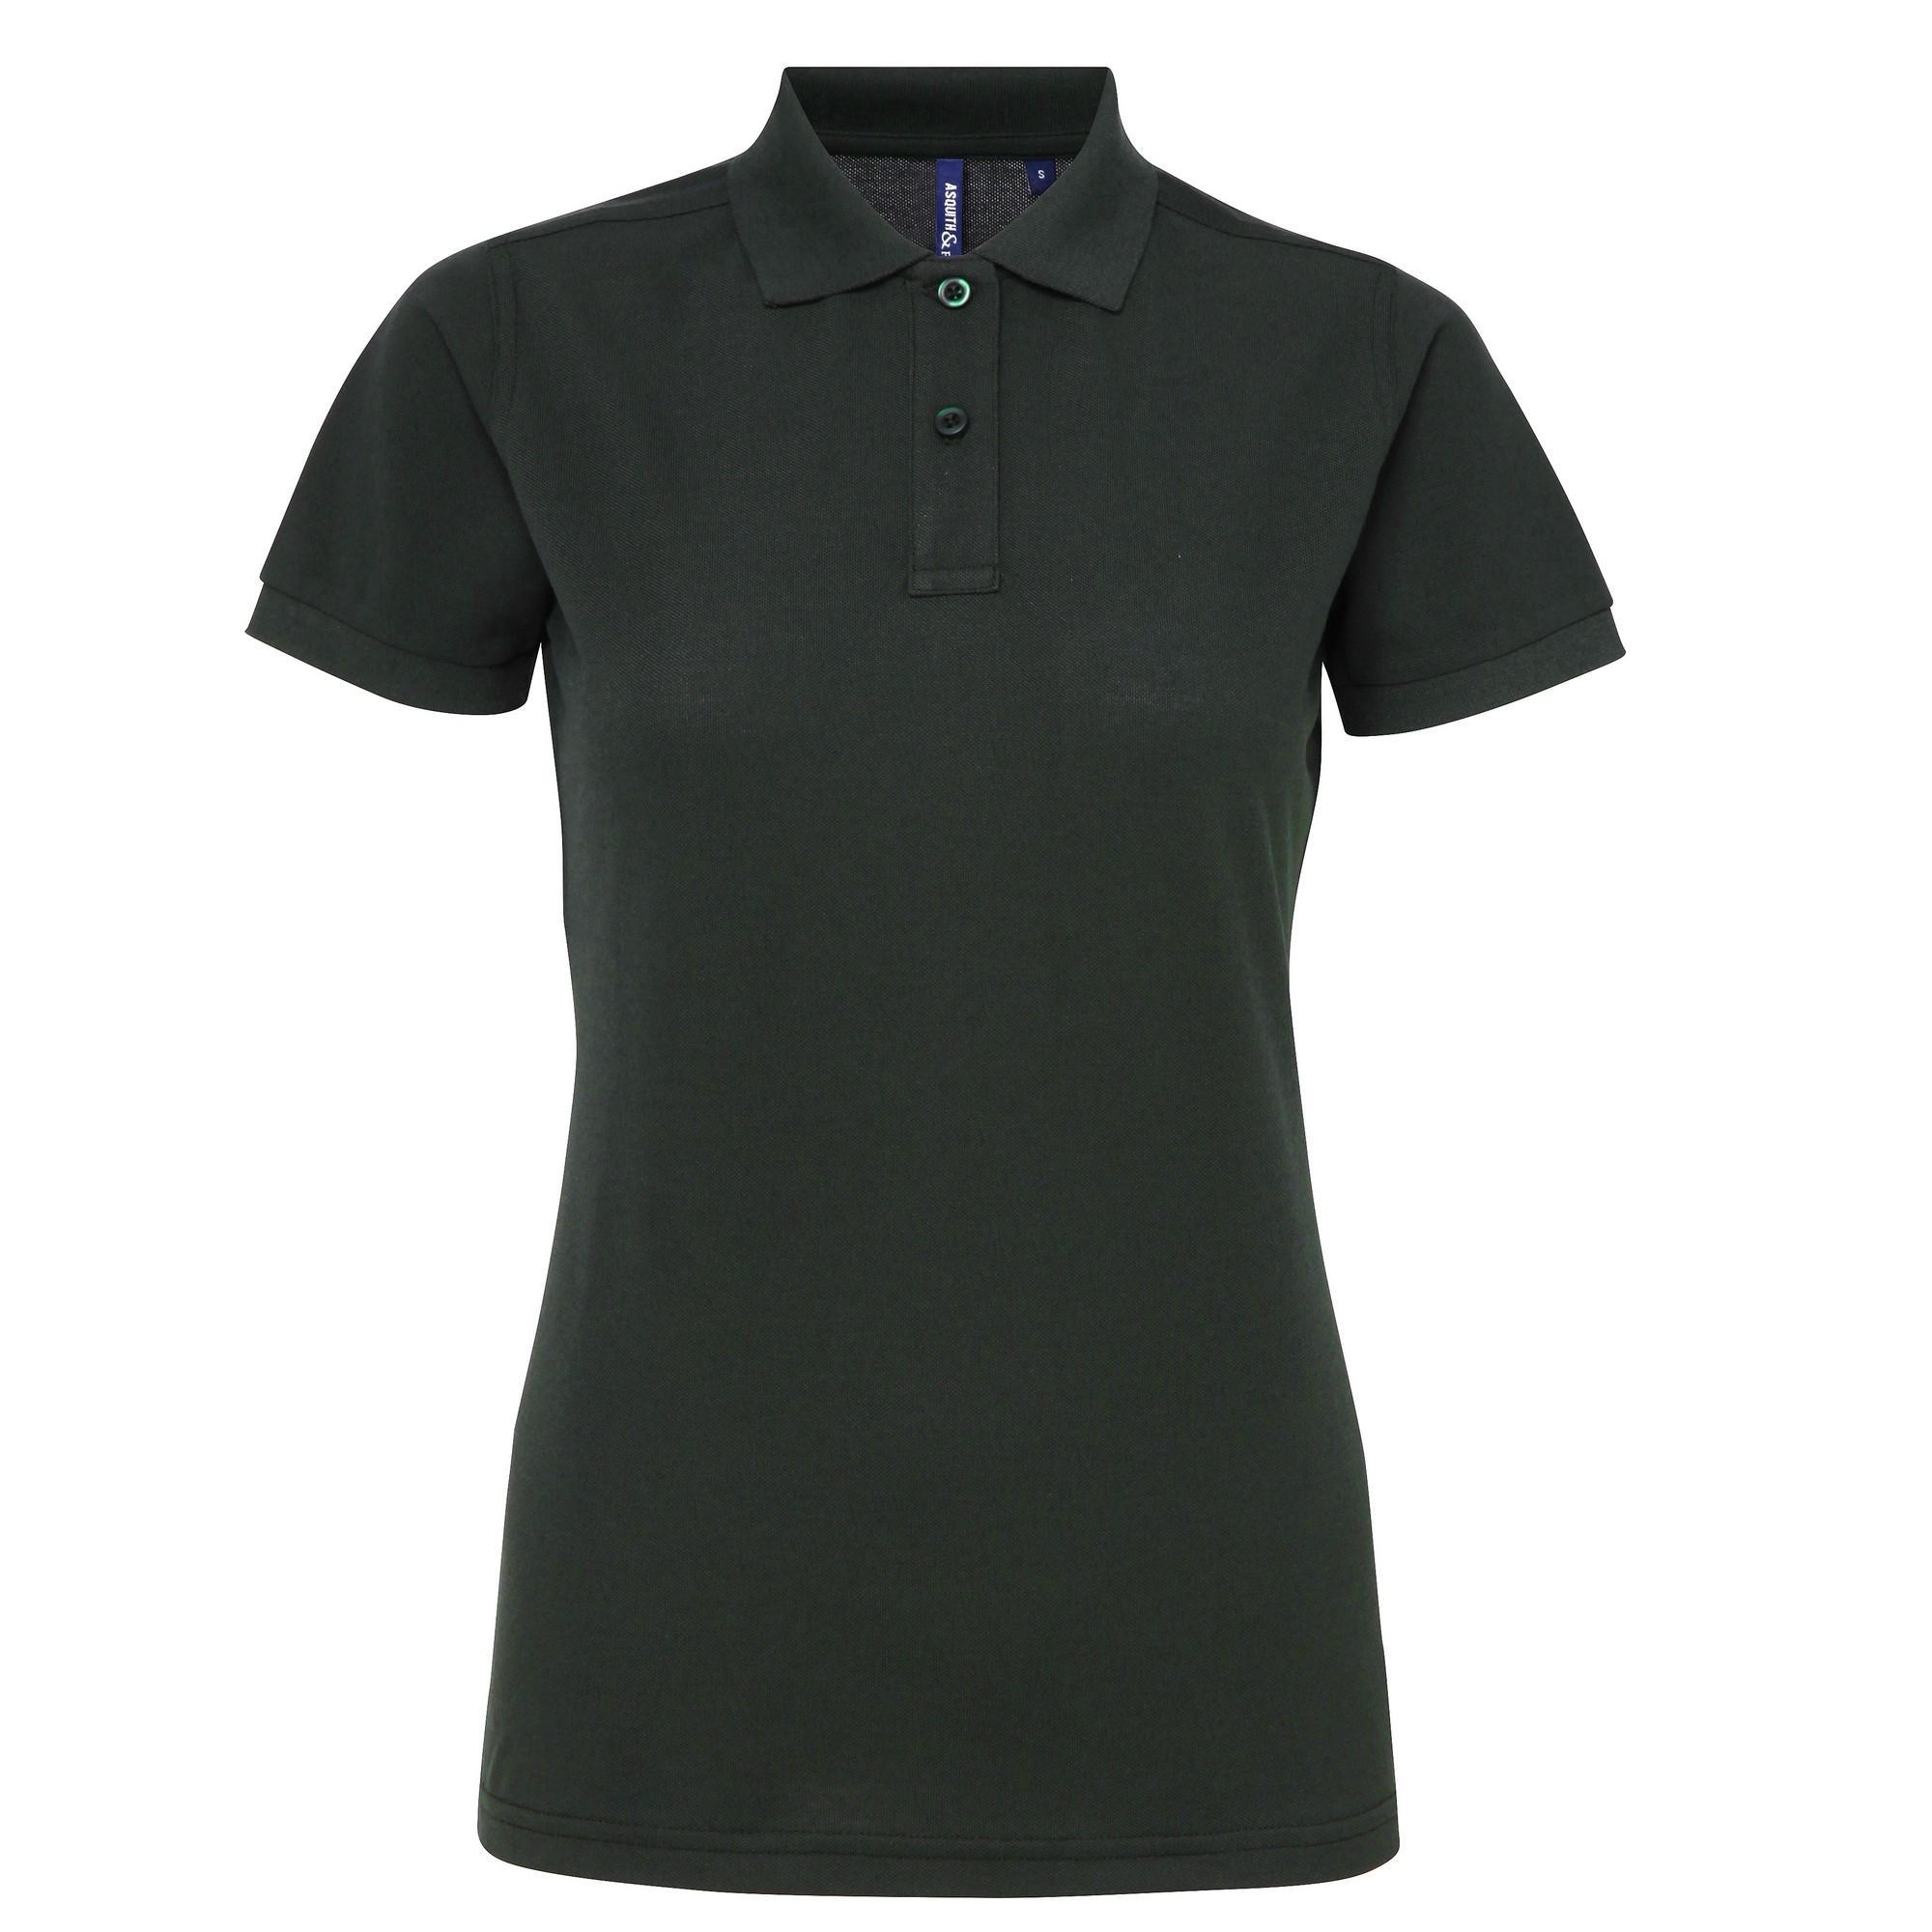 Asquith & Fox Womens/Ladies Short Sleeve Performance Blend Polo Shirt (Bottle) (S)